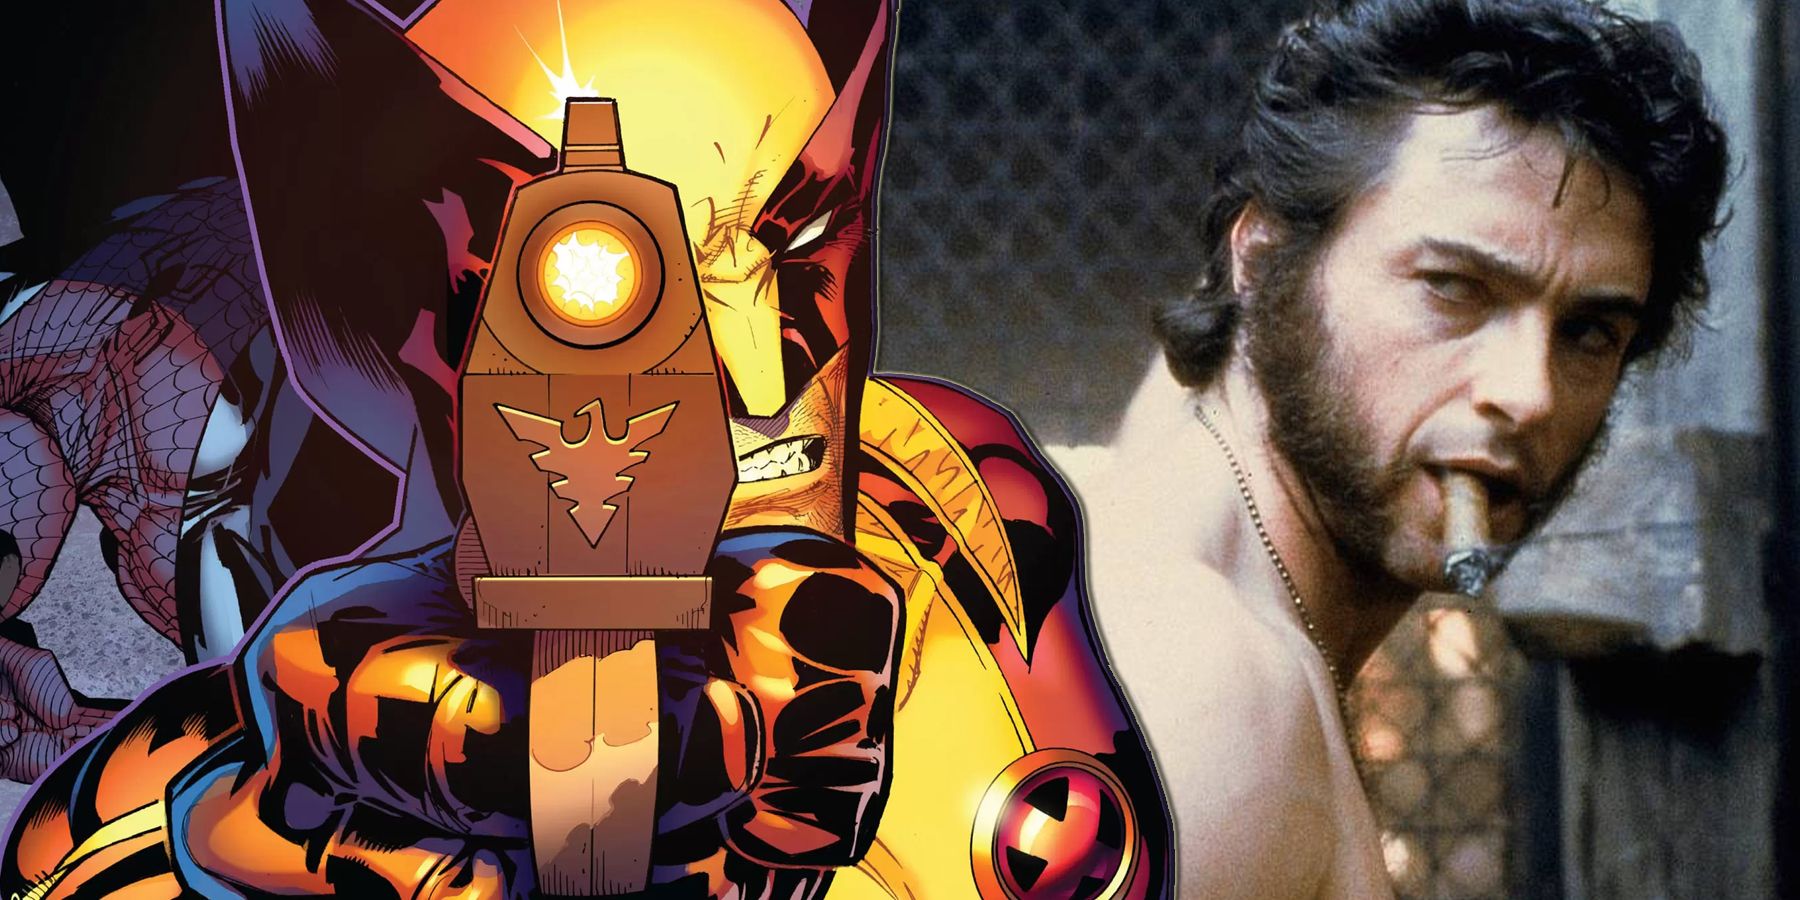 Wolverine holding a gun and Hugh Jackman as Logan